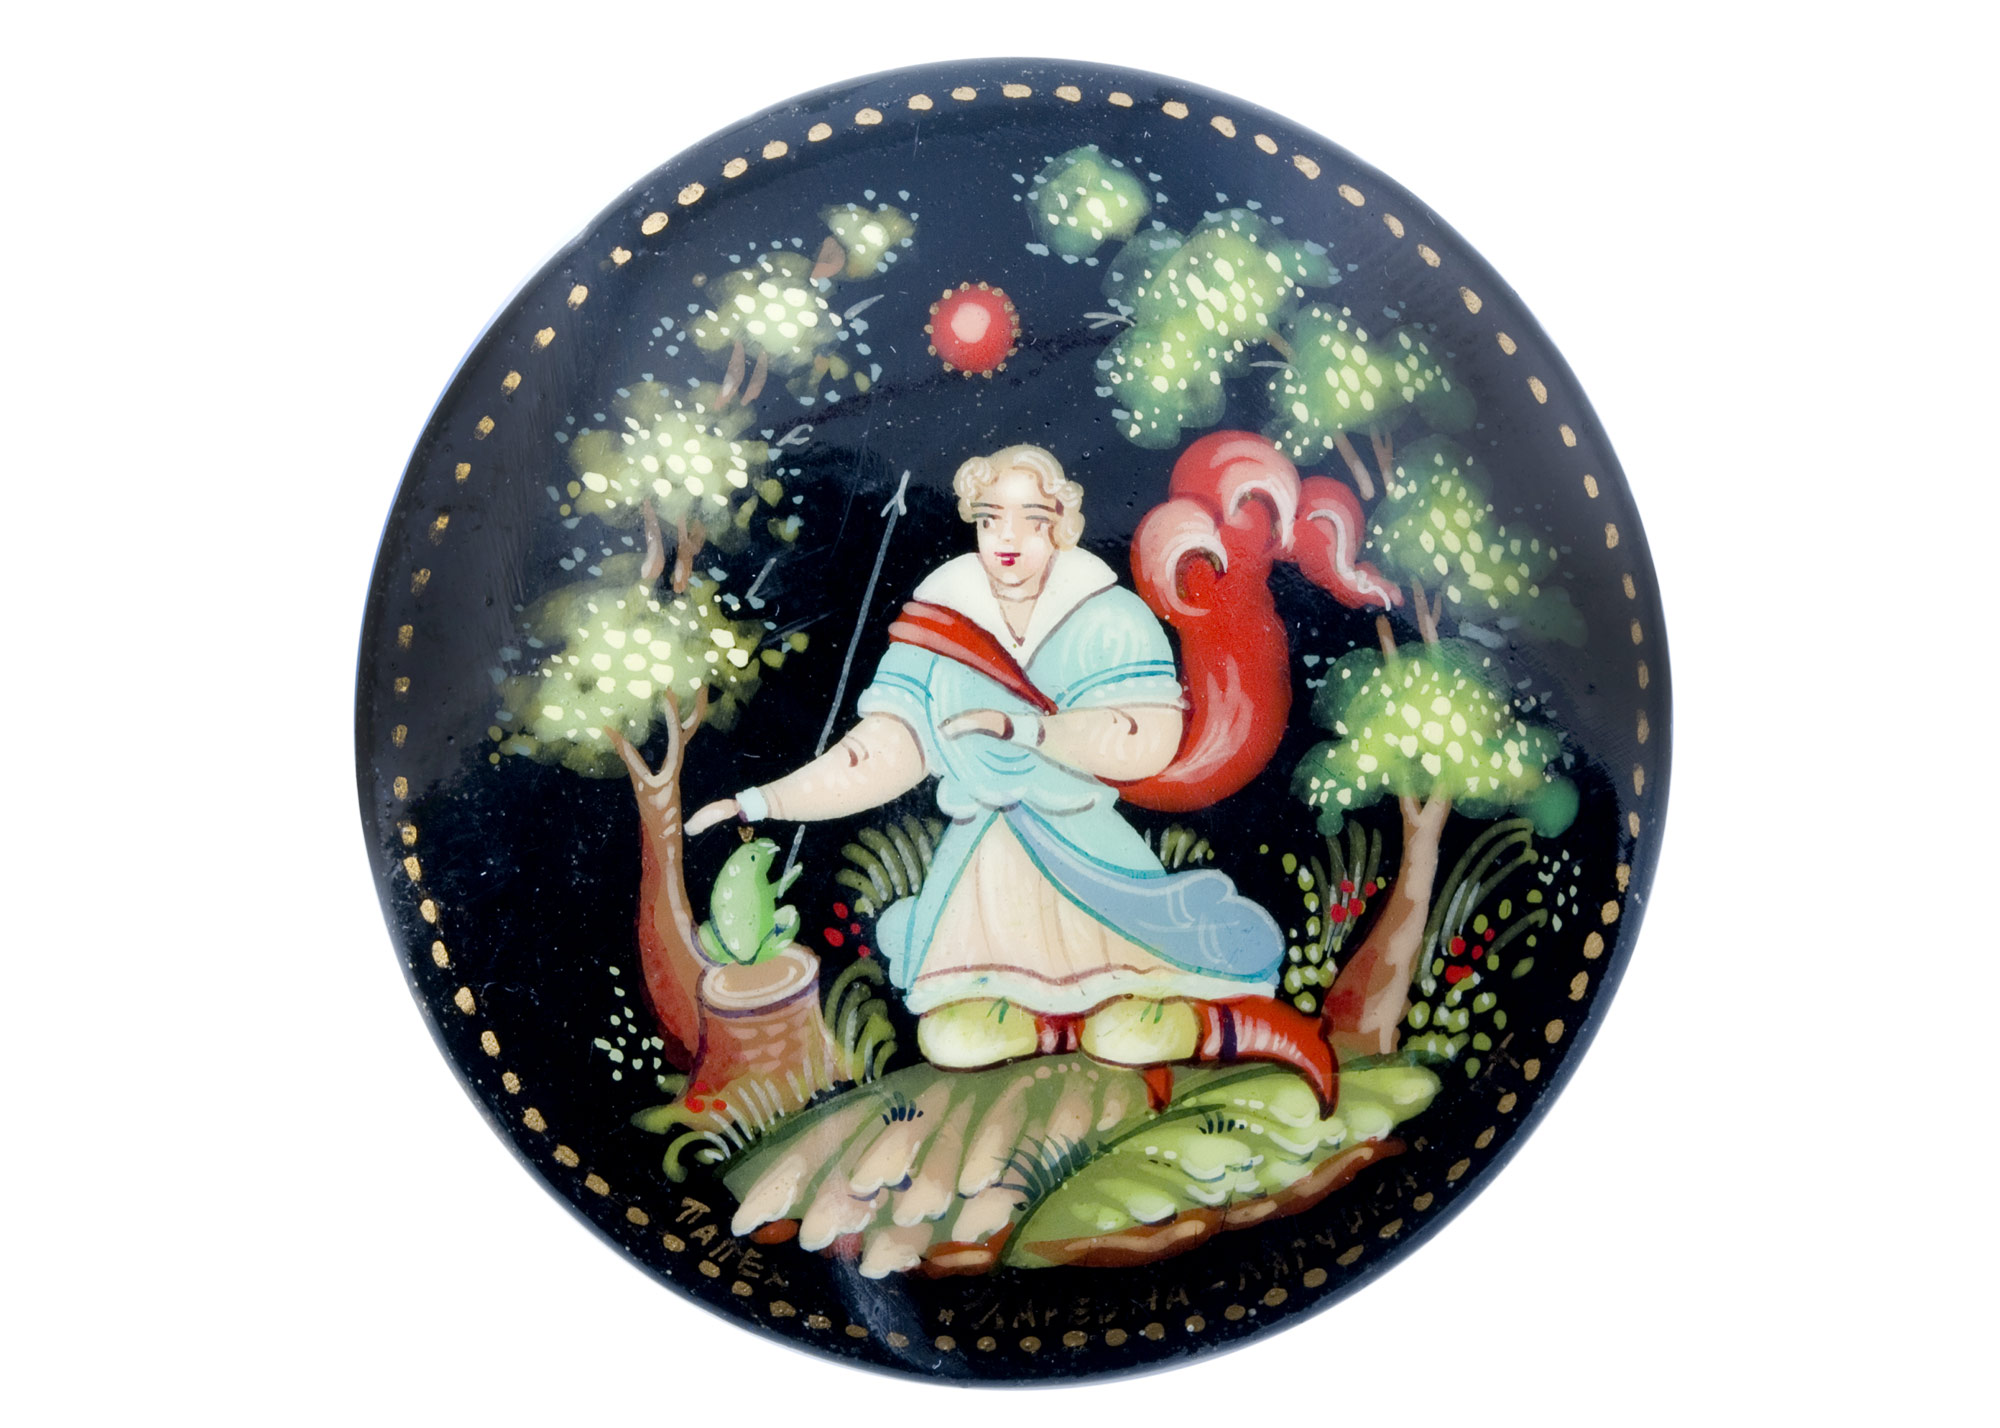 Buy Vintage Deluxe Fairy Tale Brooch  at GoldenCockerel.com